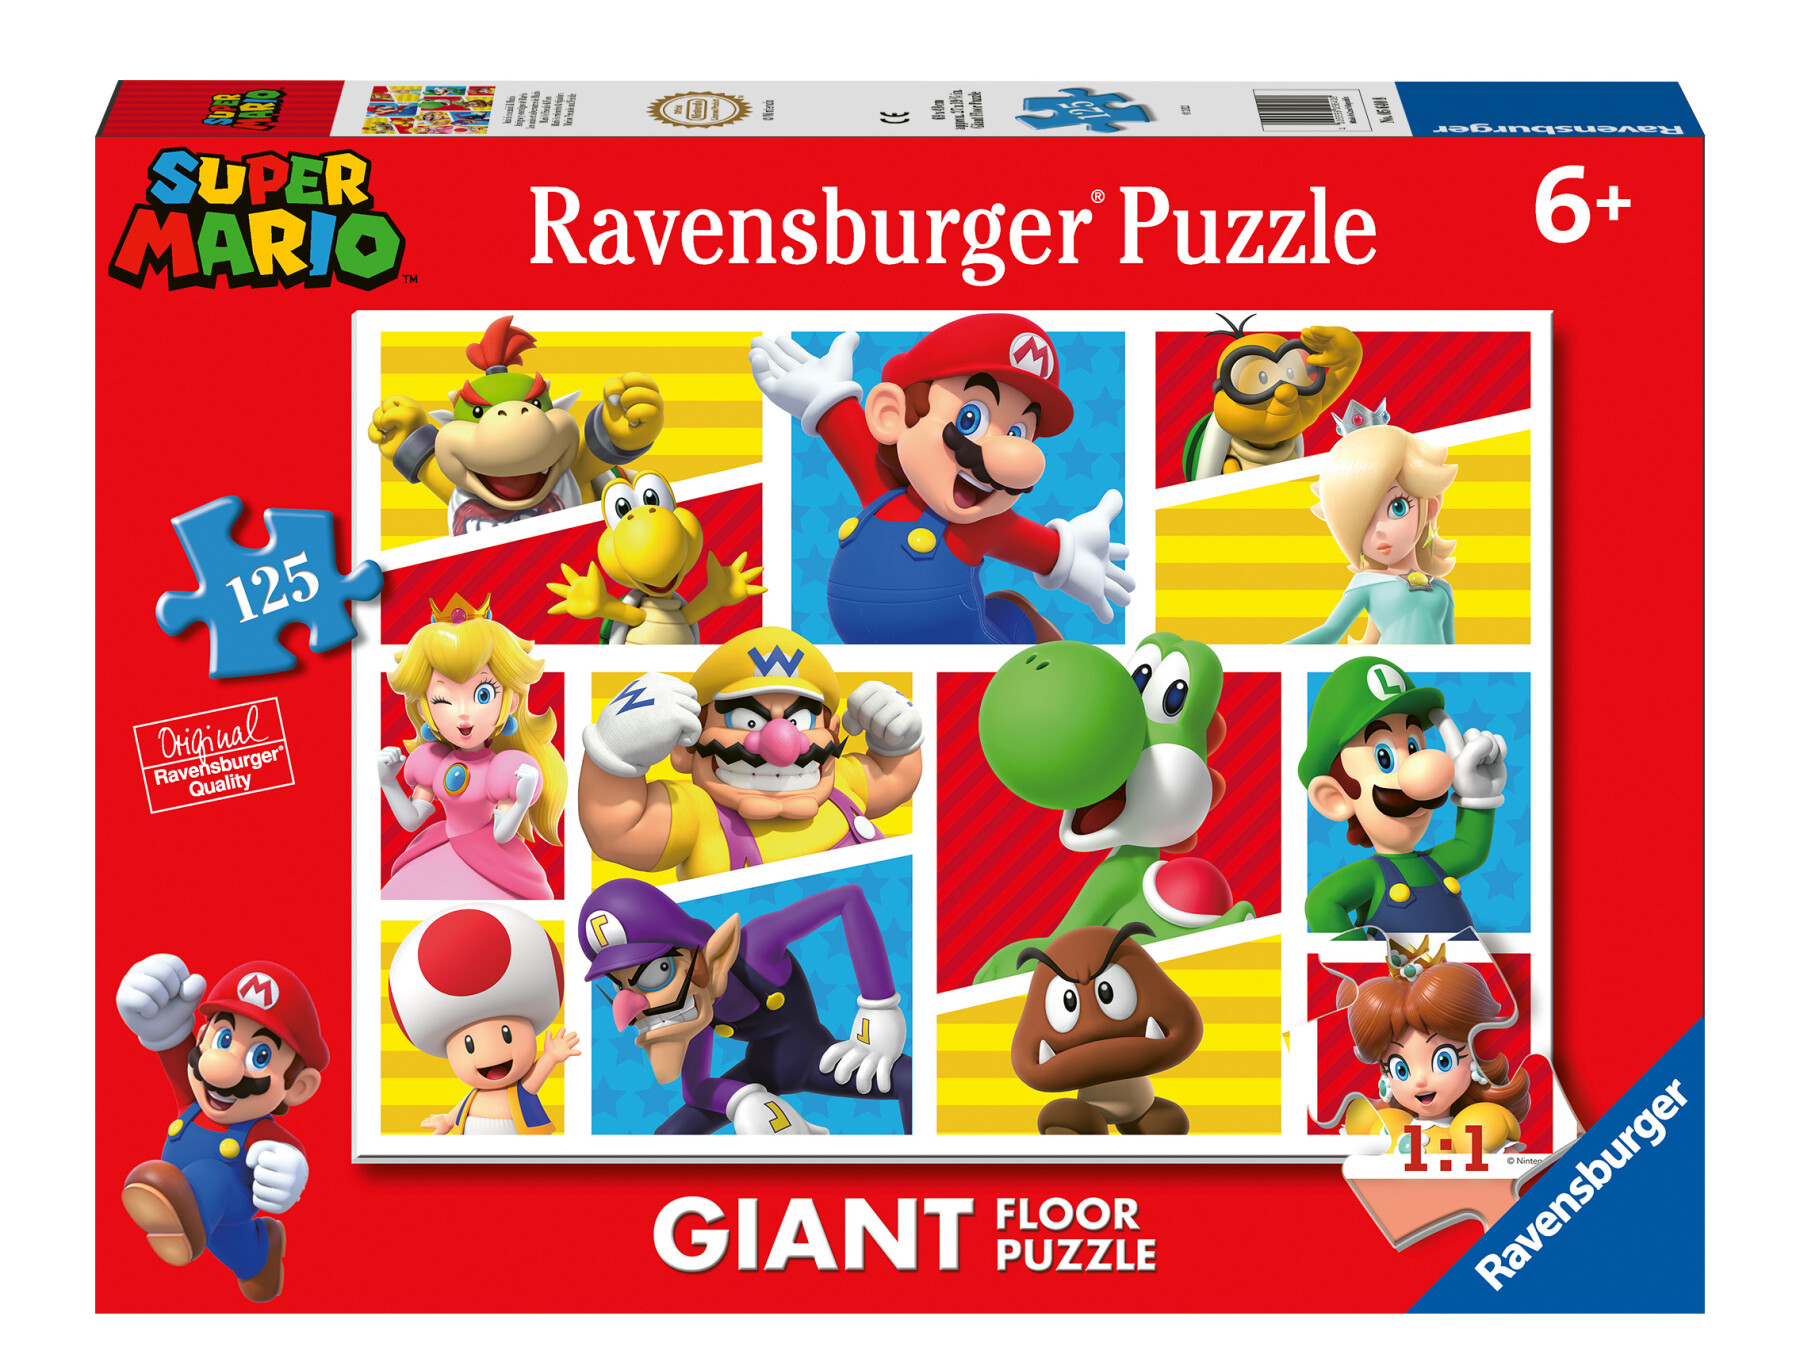 Ravensburger - puzzle super mario, collezione 125 giant pavimento, 125 pezzi, età raccomandata 6+ anni - RAVENSBURGER, Super Mario